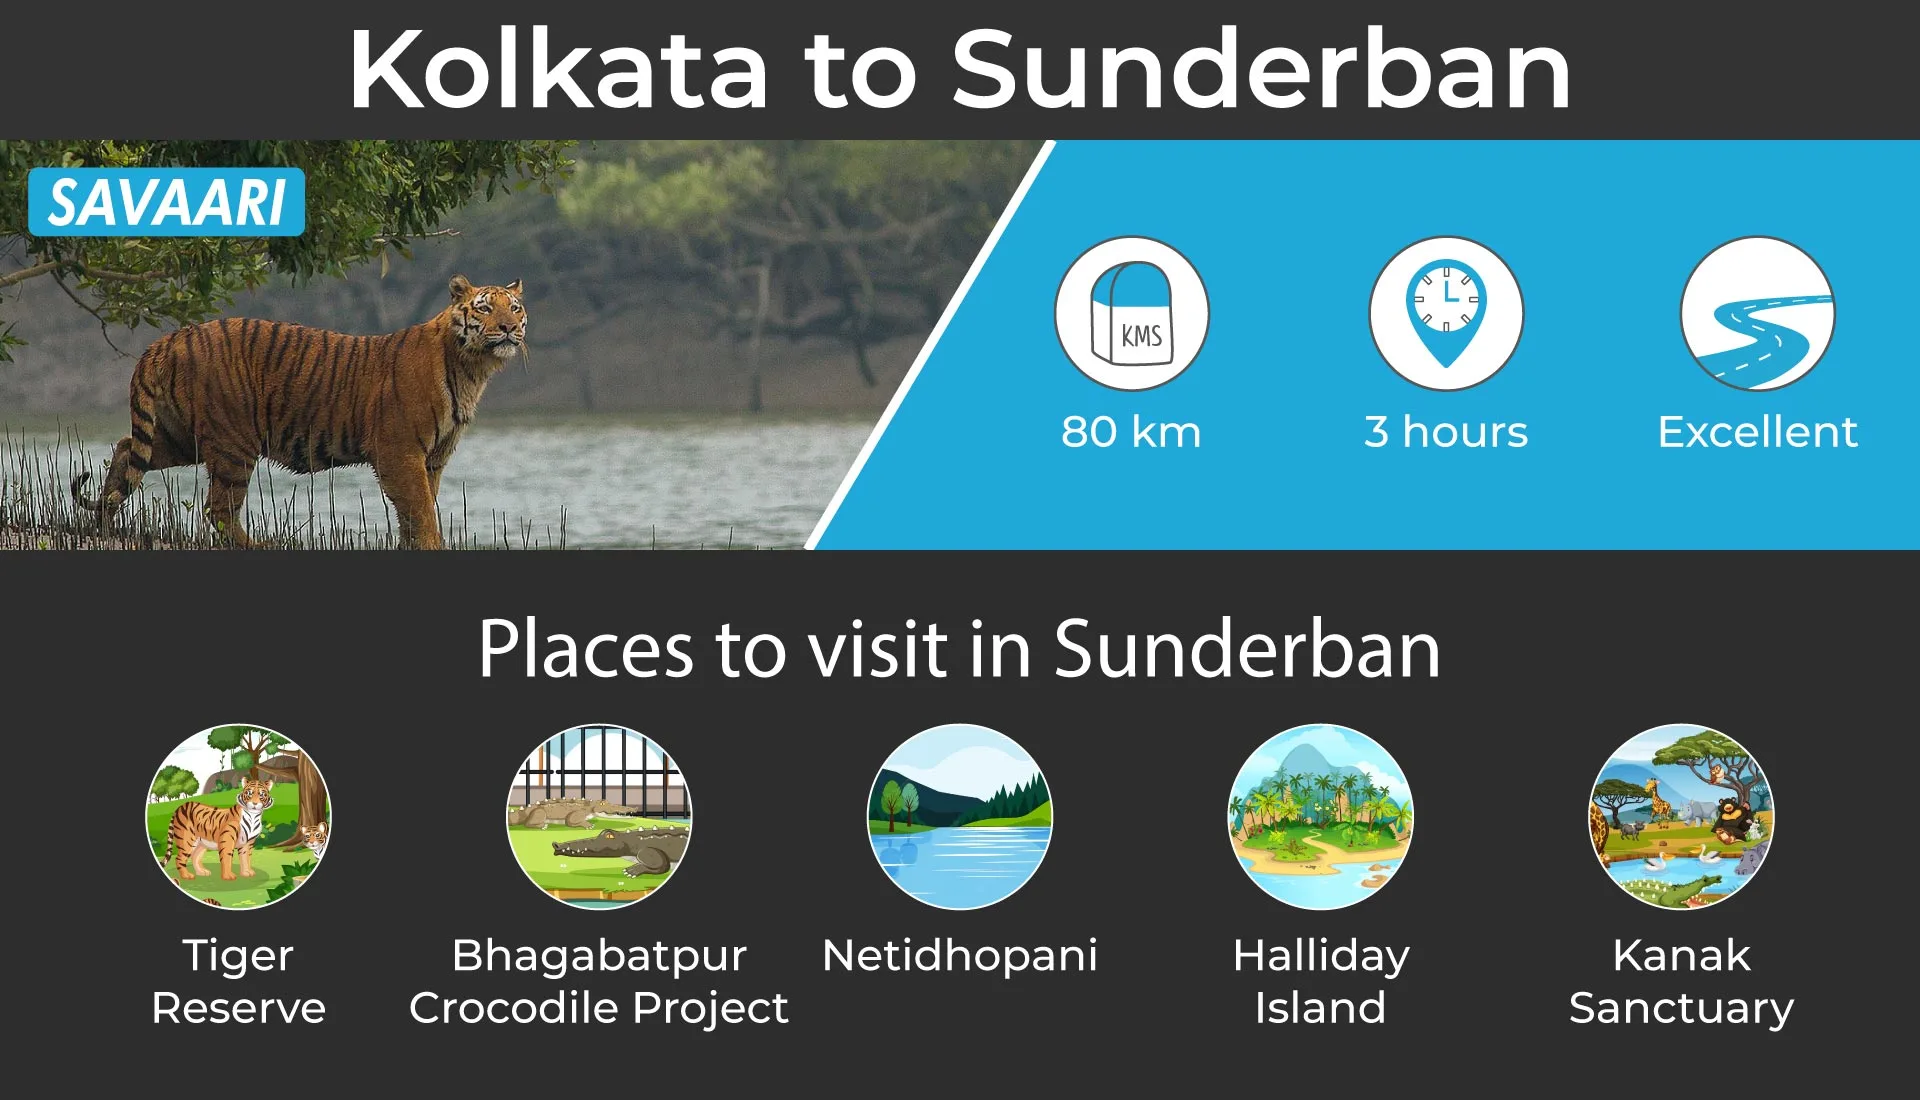 Kolkata to Sunderban weekend getaway